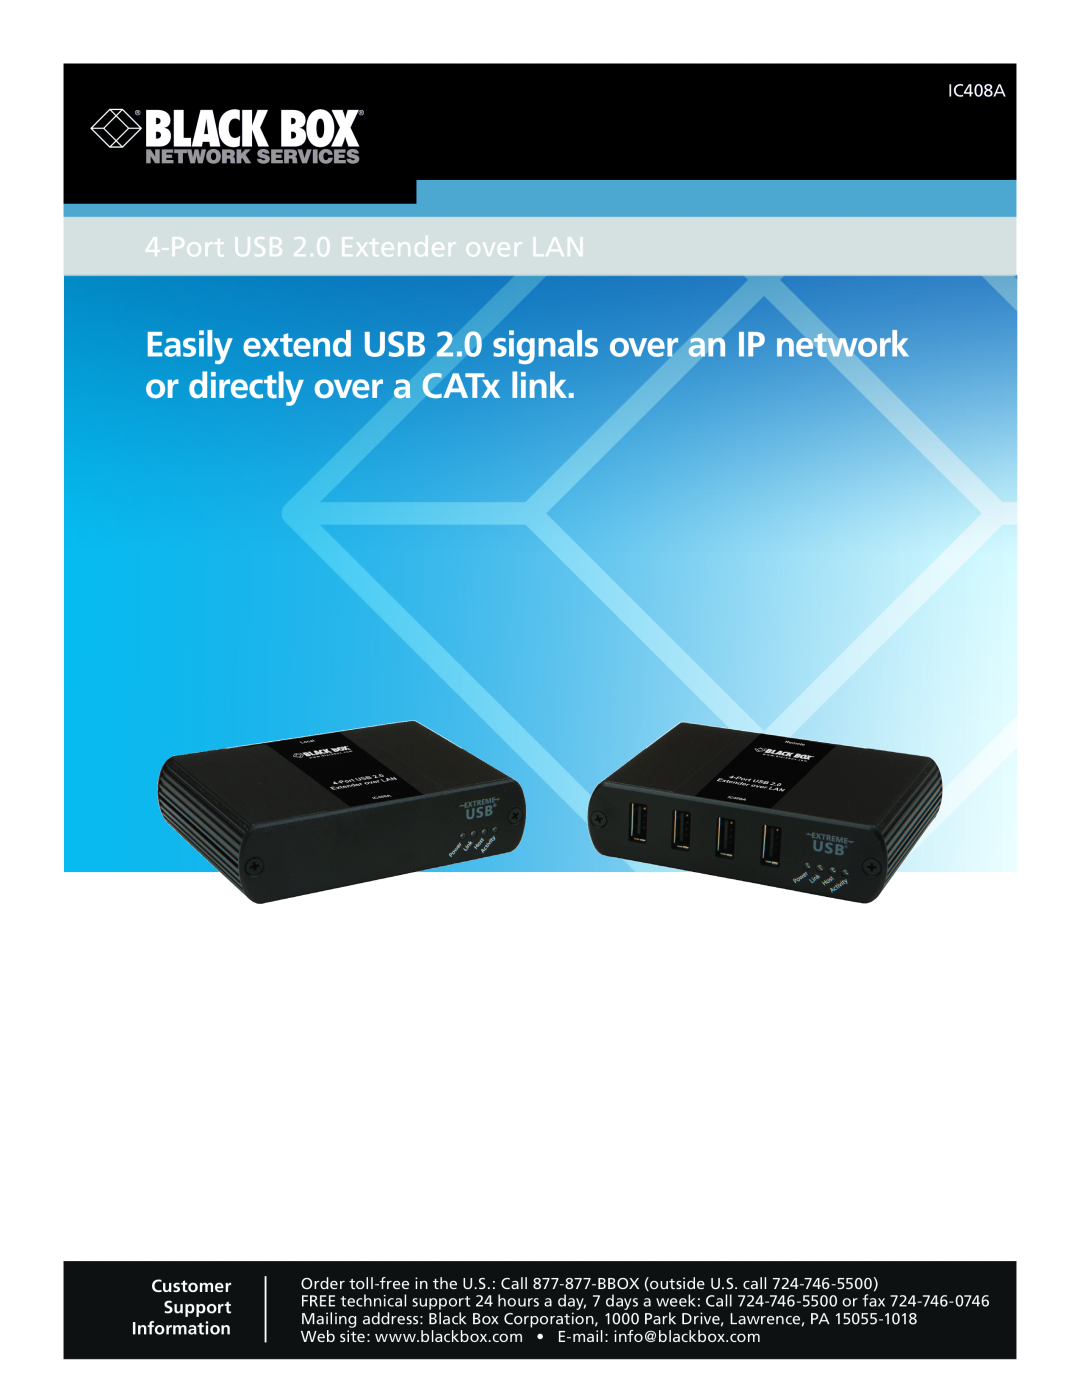 Black Box 4-Port USB 2.0 Extender over LAN manual IC408A, Customer Support Information 